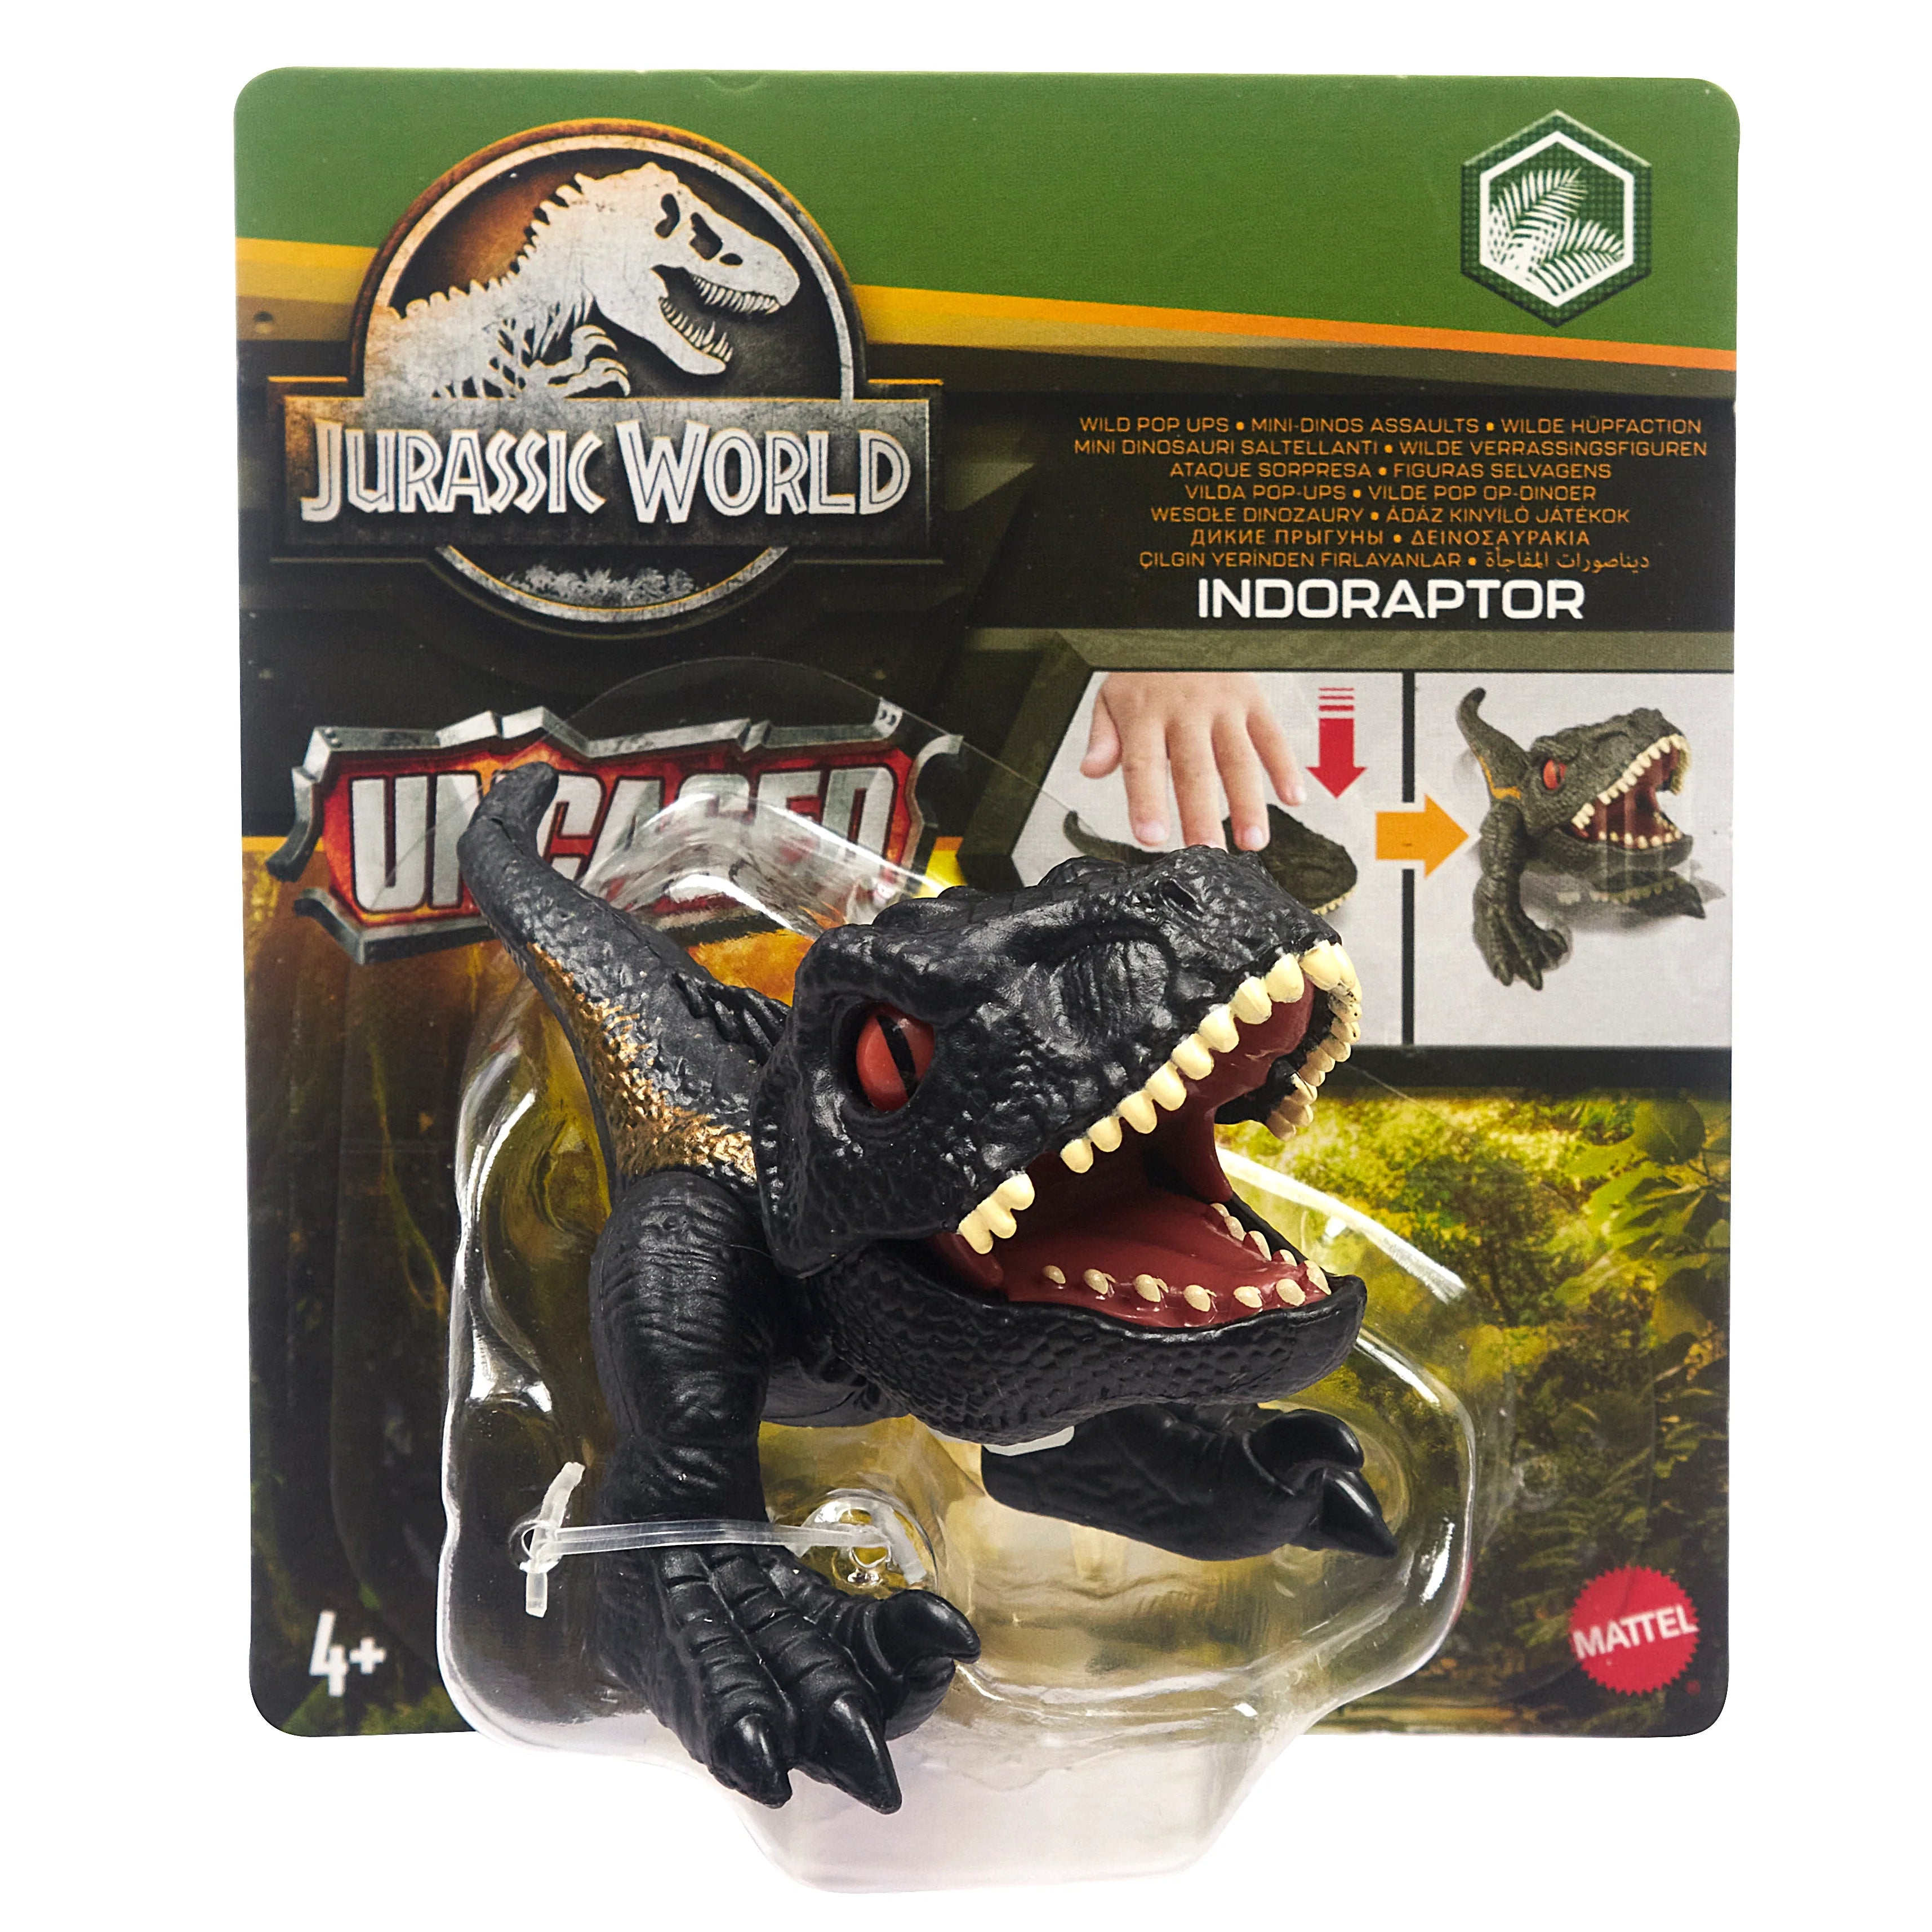 Jurassic World Wild Pop Ups assorted